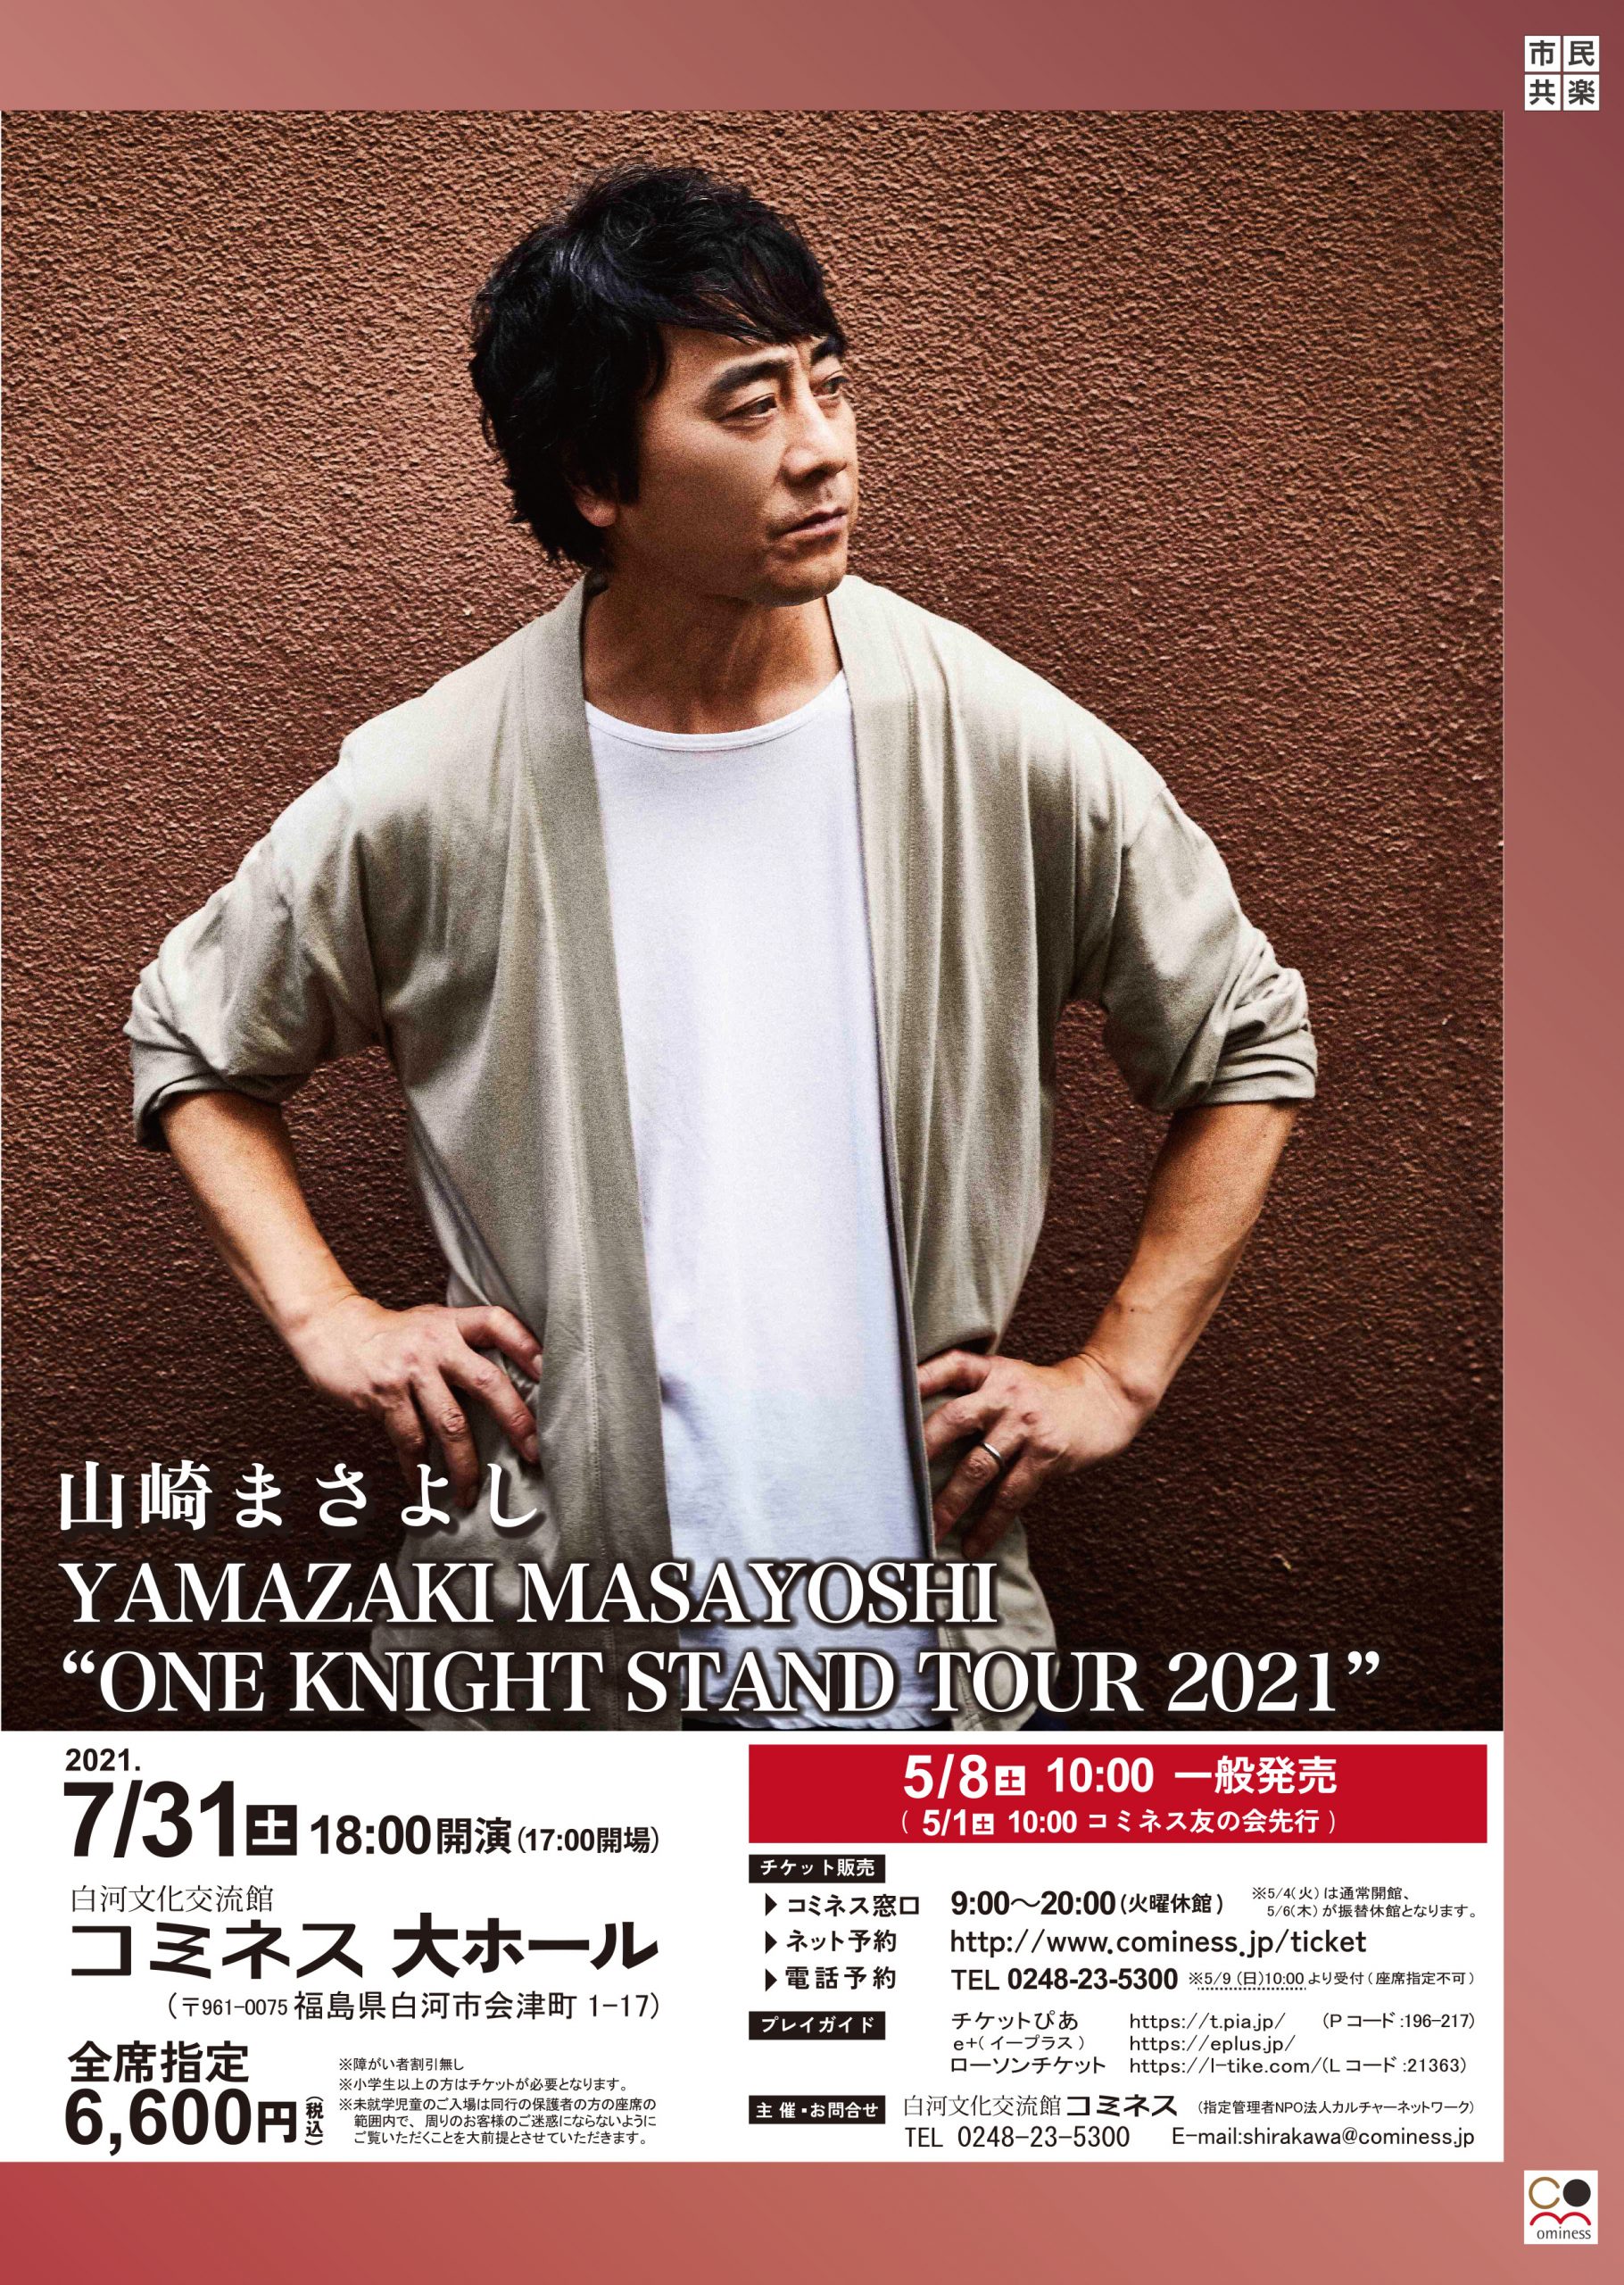 YAMAZAKI MASAYOSHI ”ONE KNIGHT STAND TOUR 2021” | 白河文化交流館